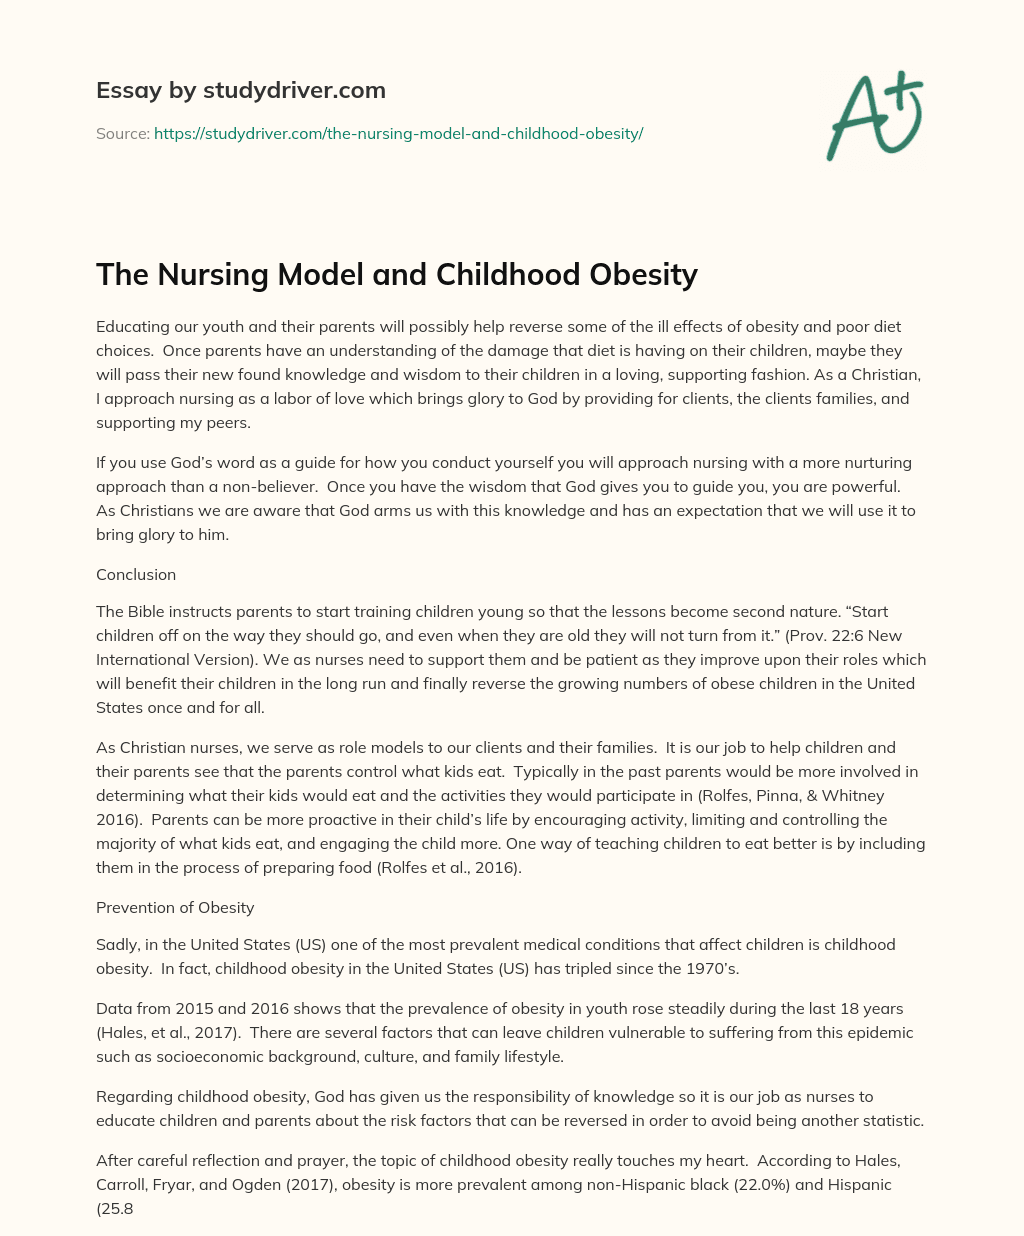 The Nursing Model and Childhood Obesity essay